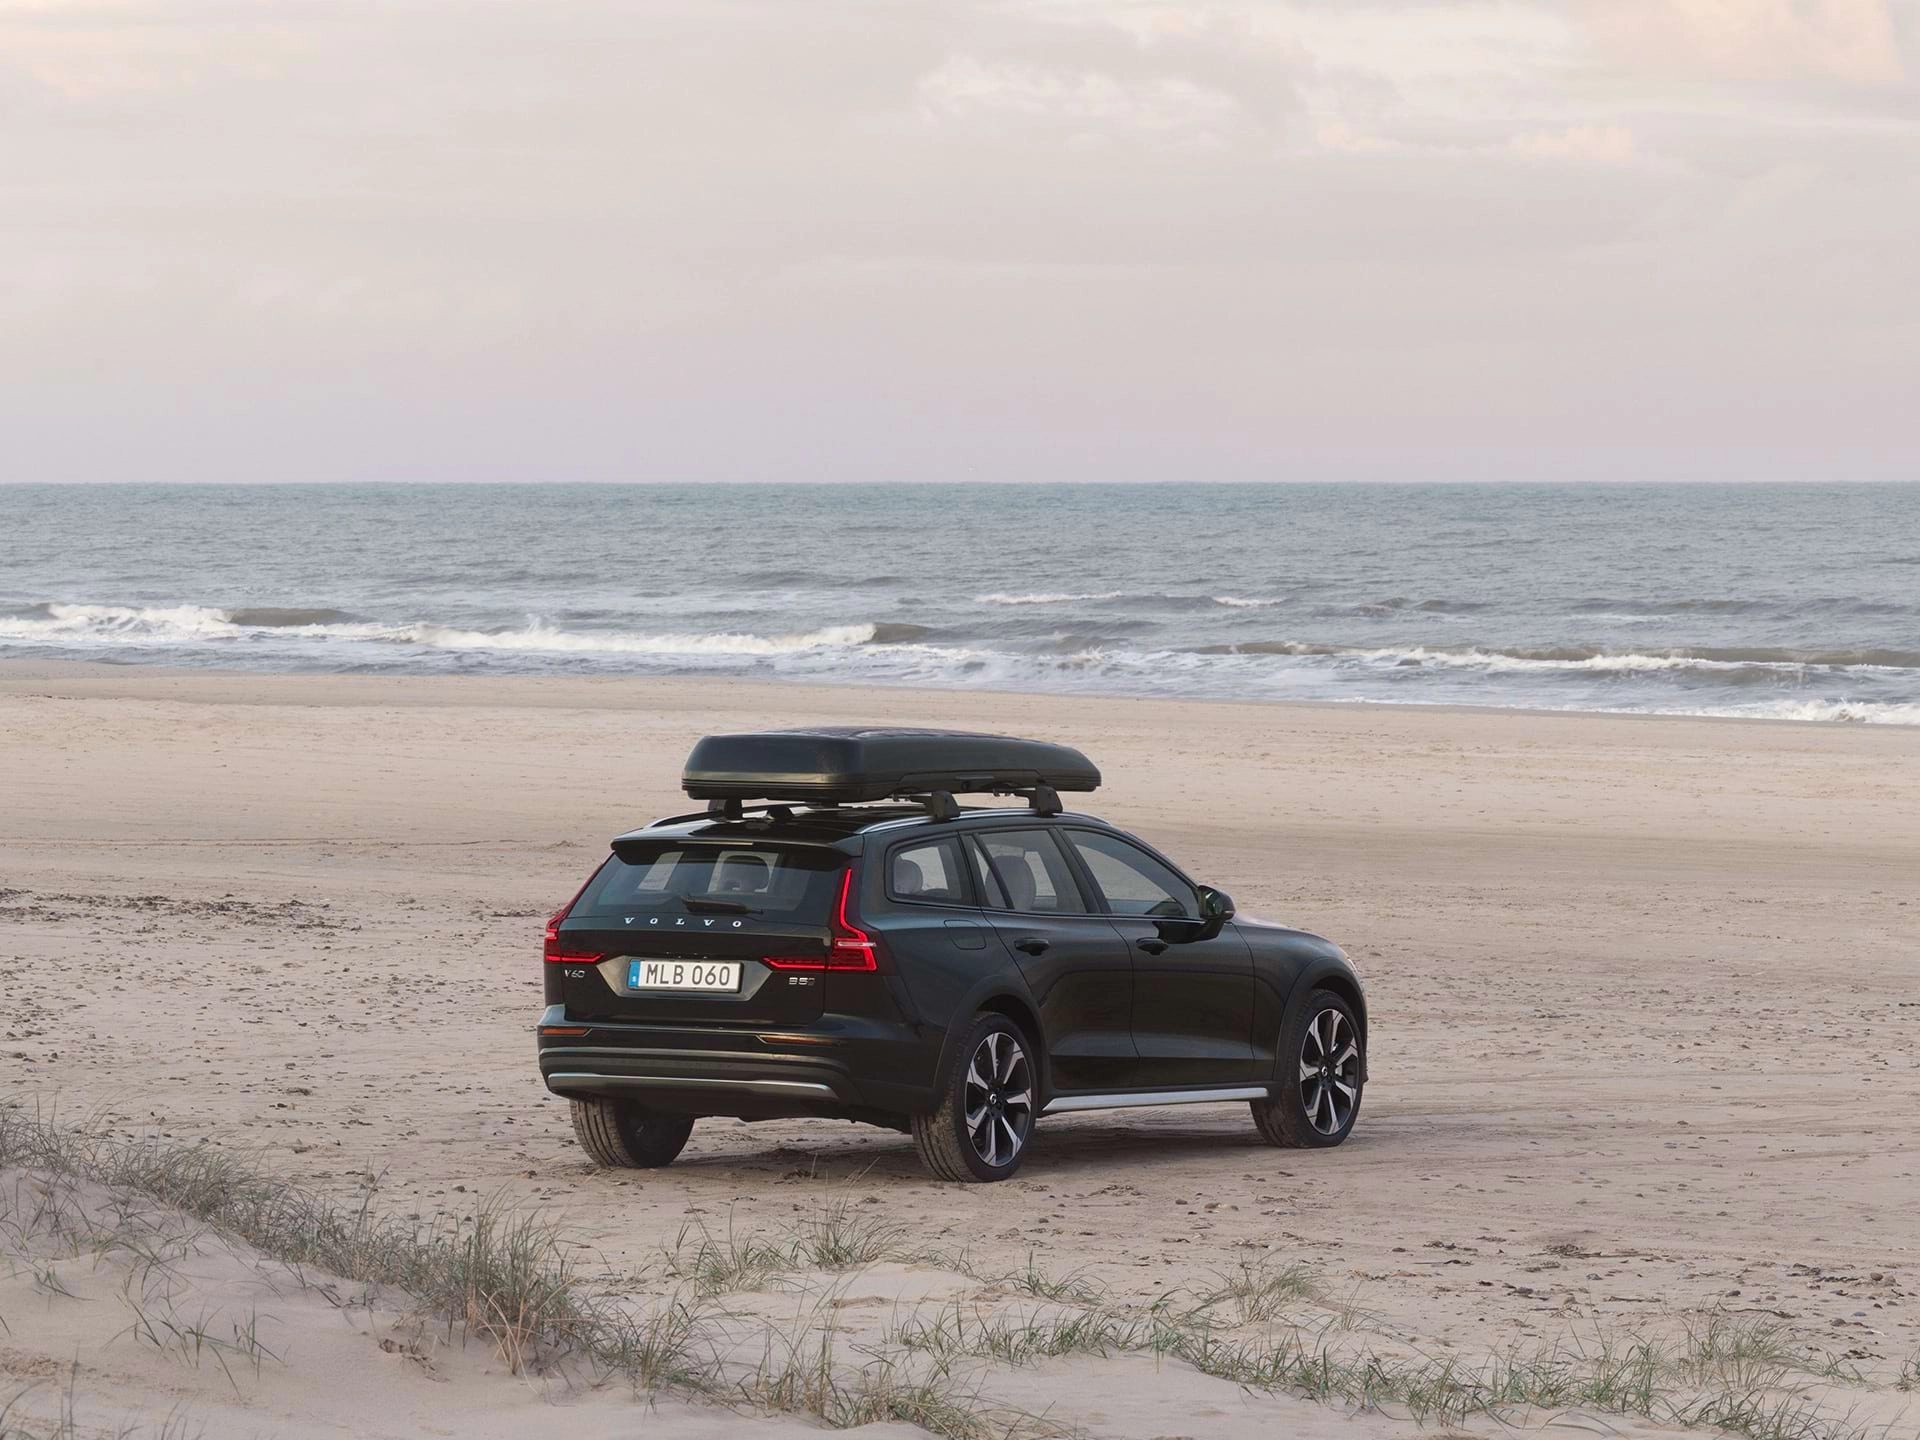 Karavan Volvo s krovnom kutijom parkiran na pješčanoj plaži.